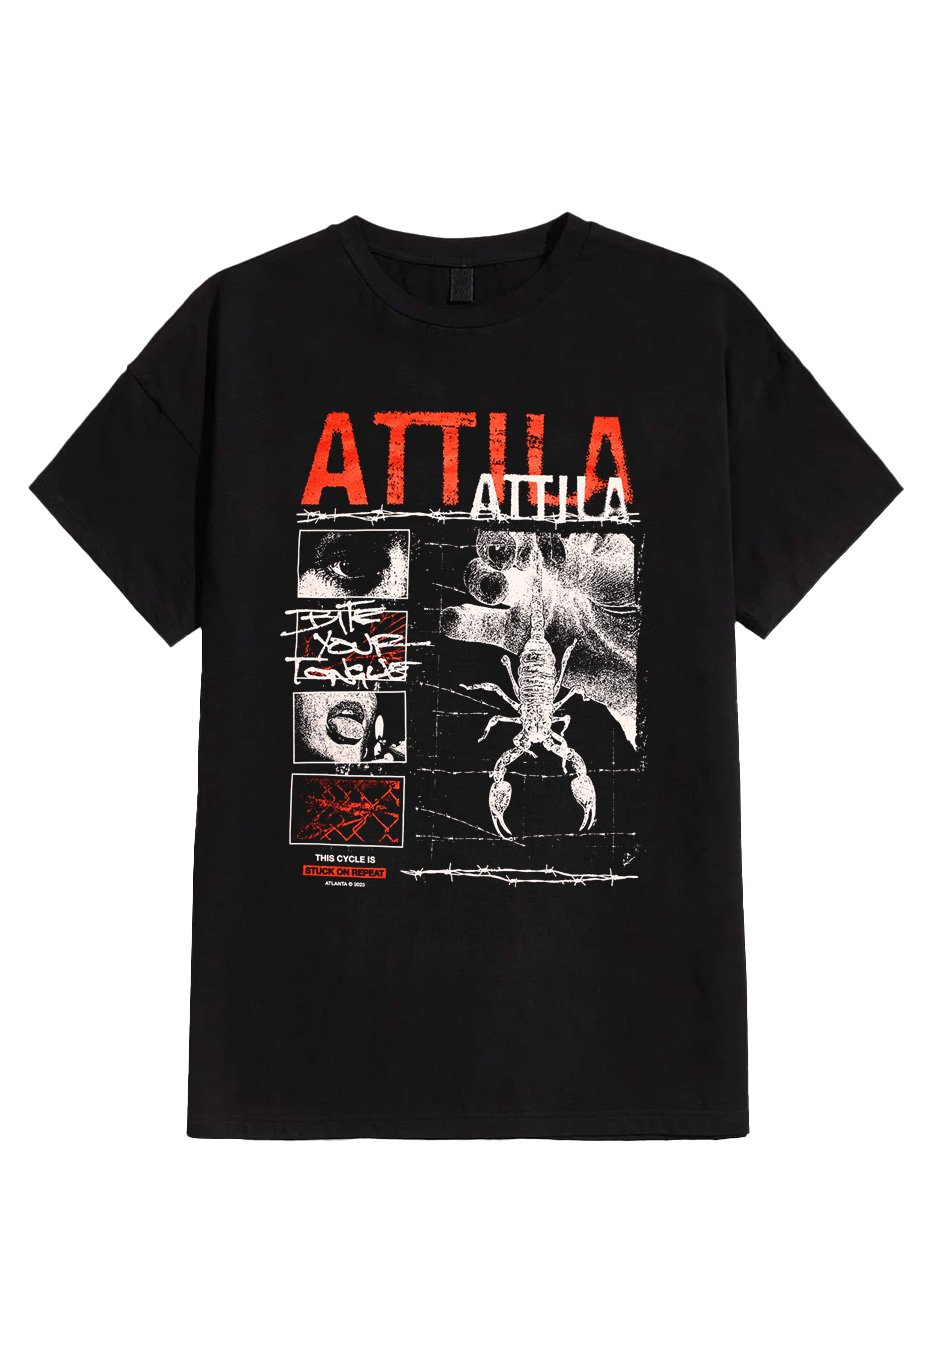 Attila - Scorpion - T-Shirt